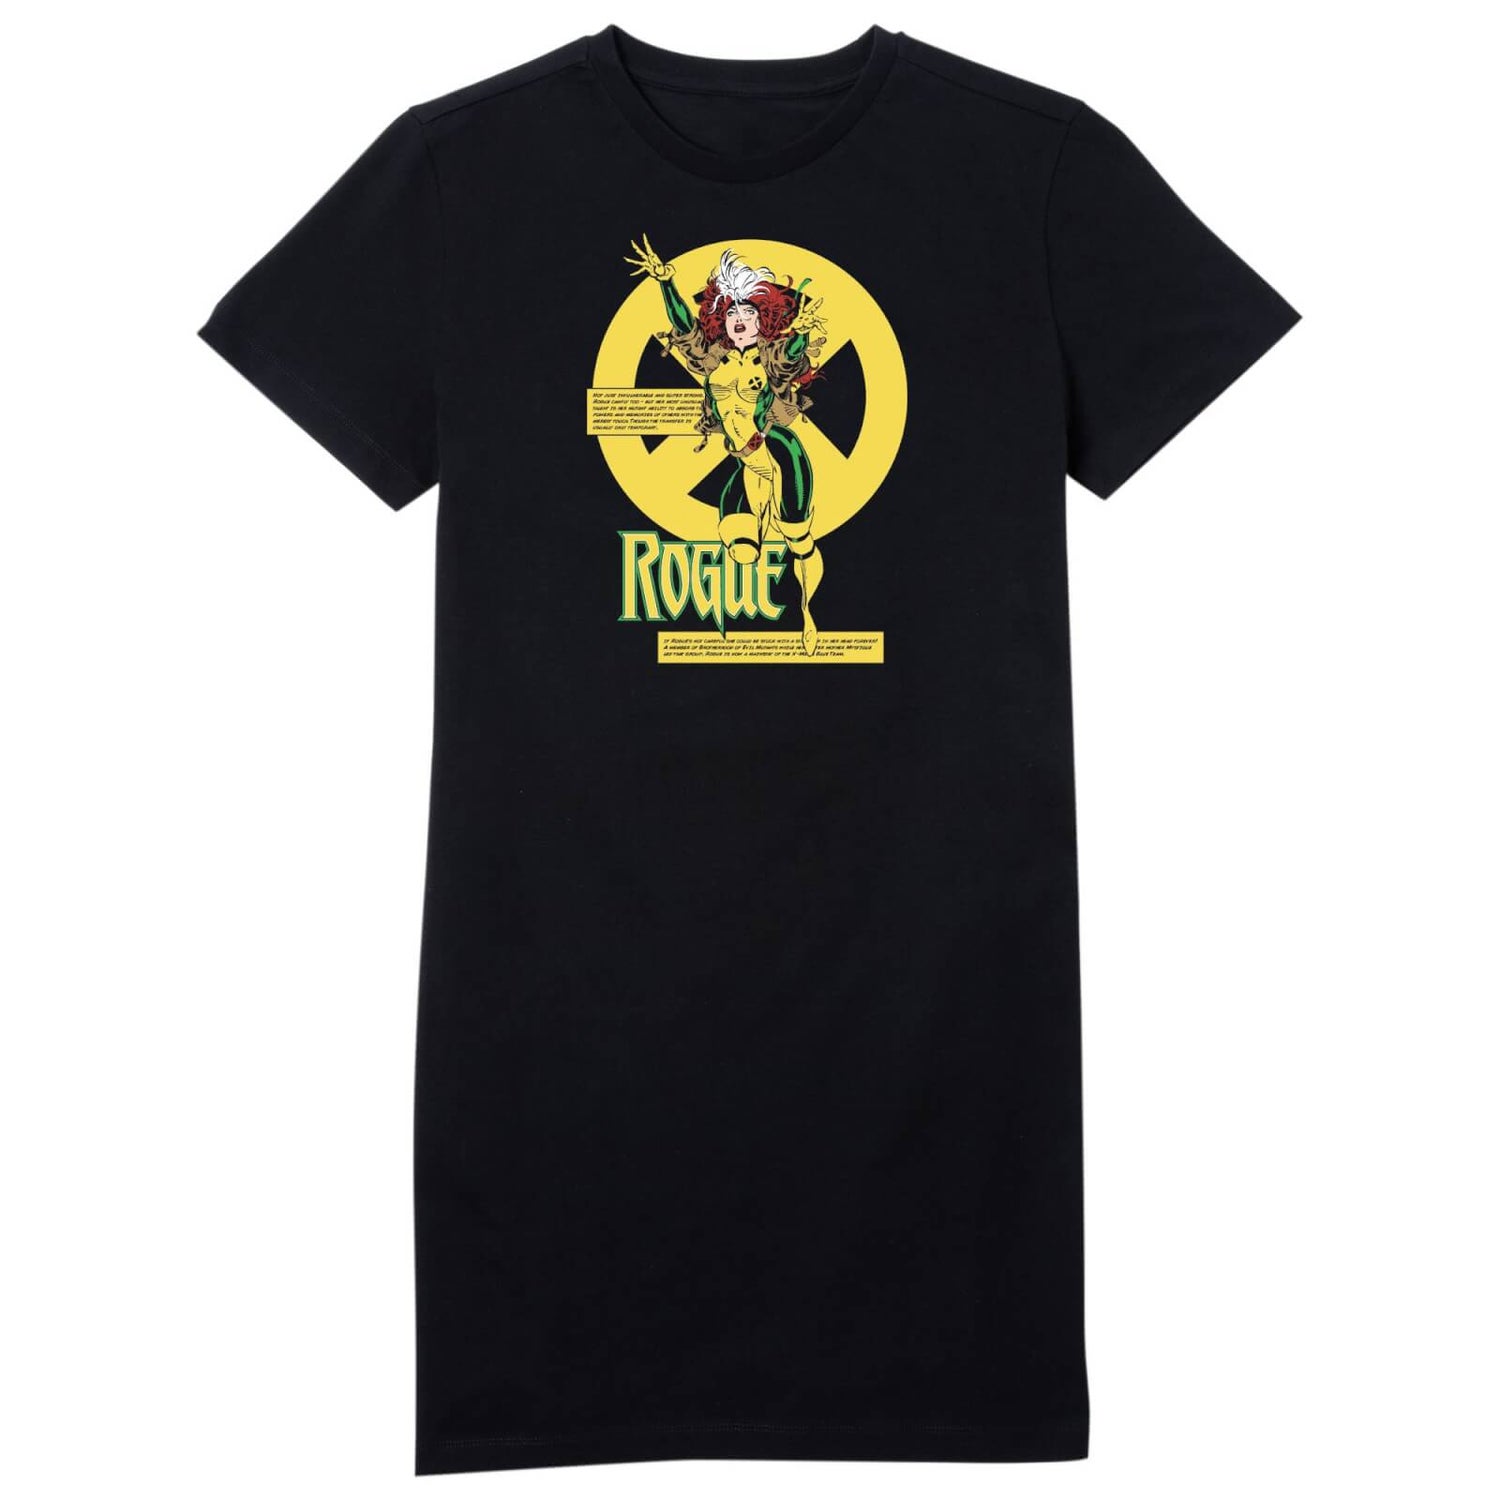 X-Men Rogue Bio Drk Women's T-Shirt Dress - Black